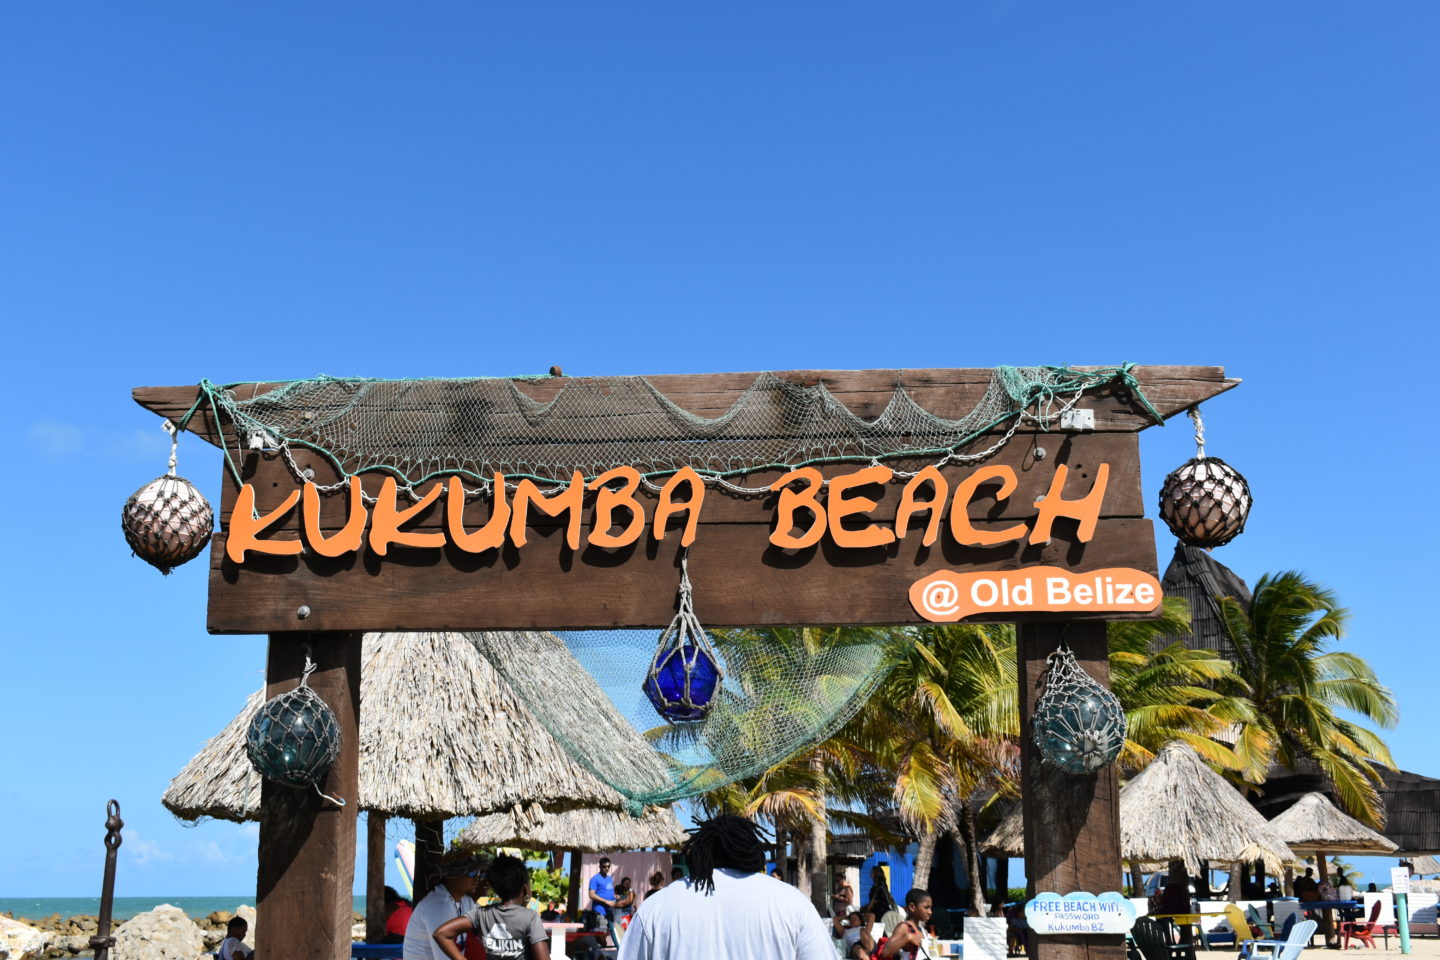 Kukumba Beach, Belize